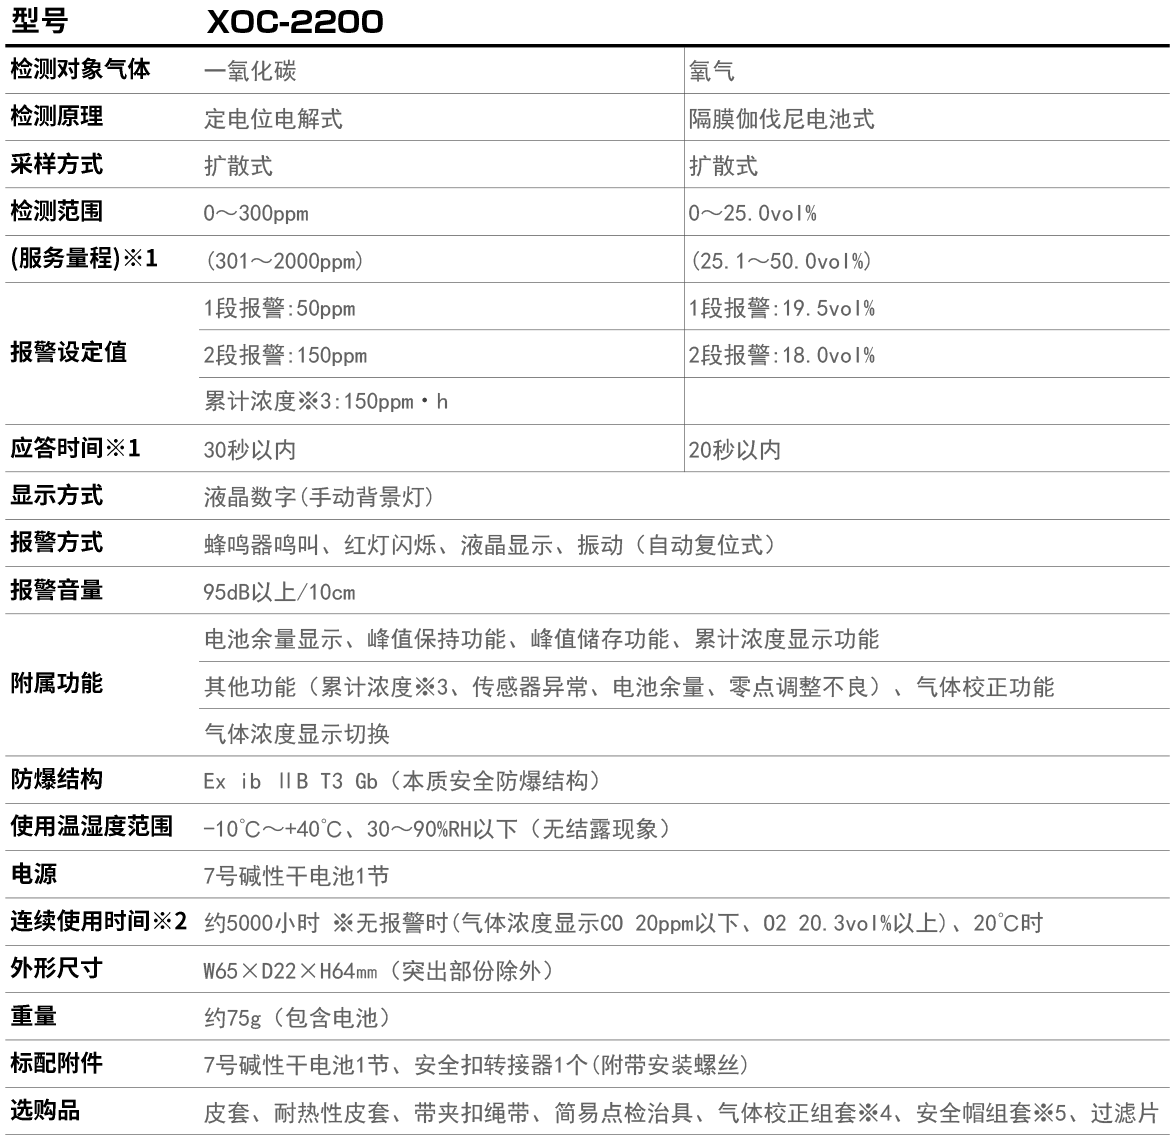 XOC-2200产品参数.jpg